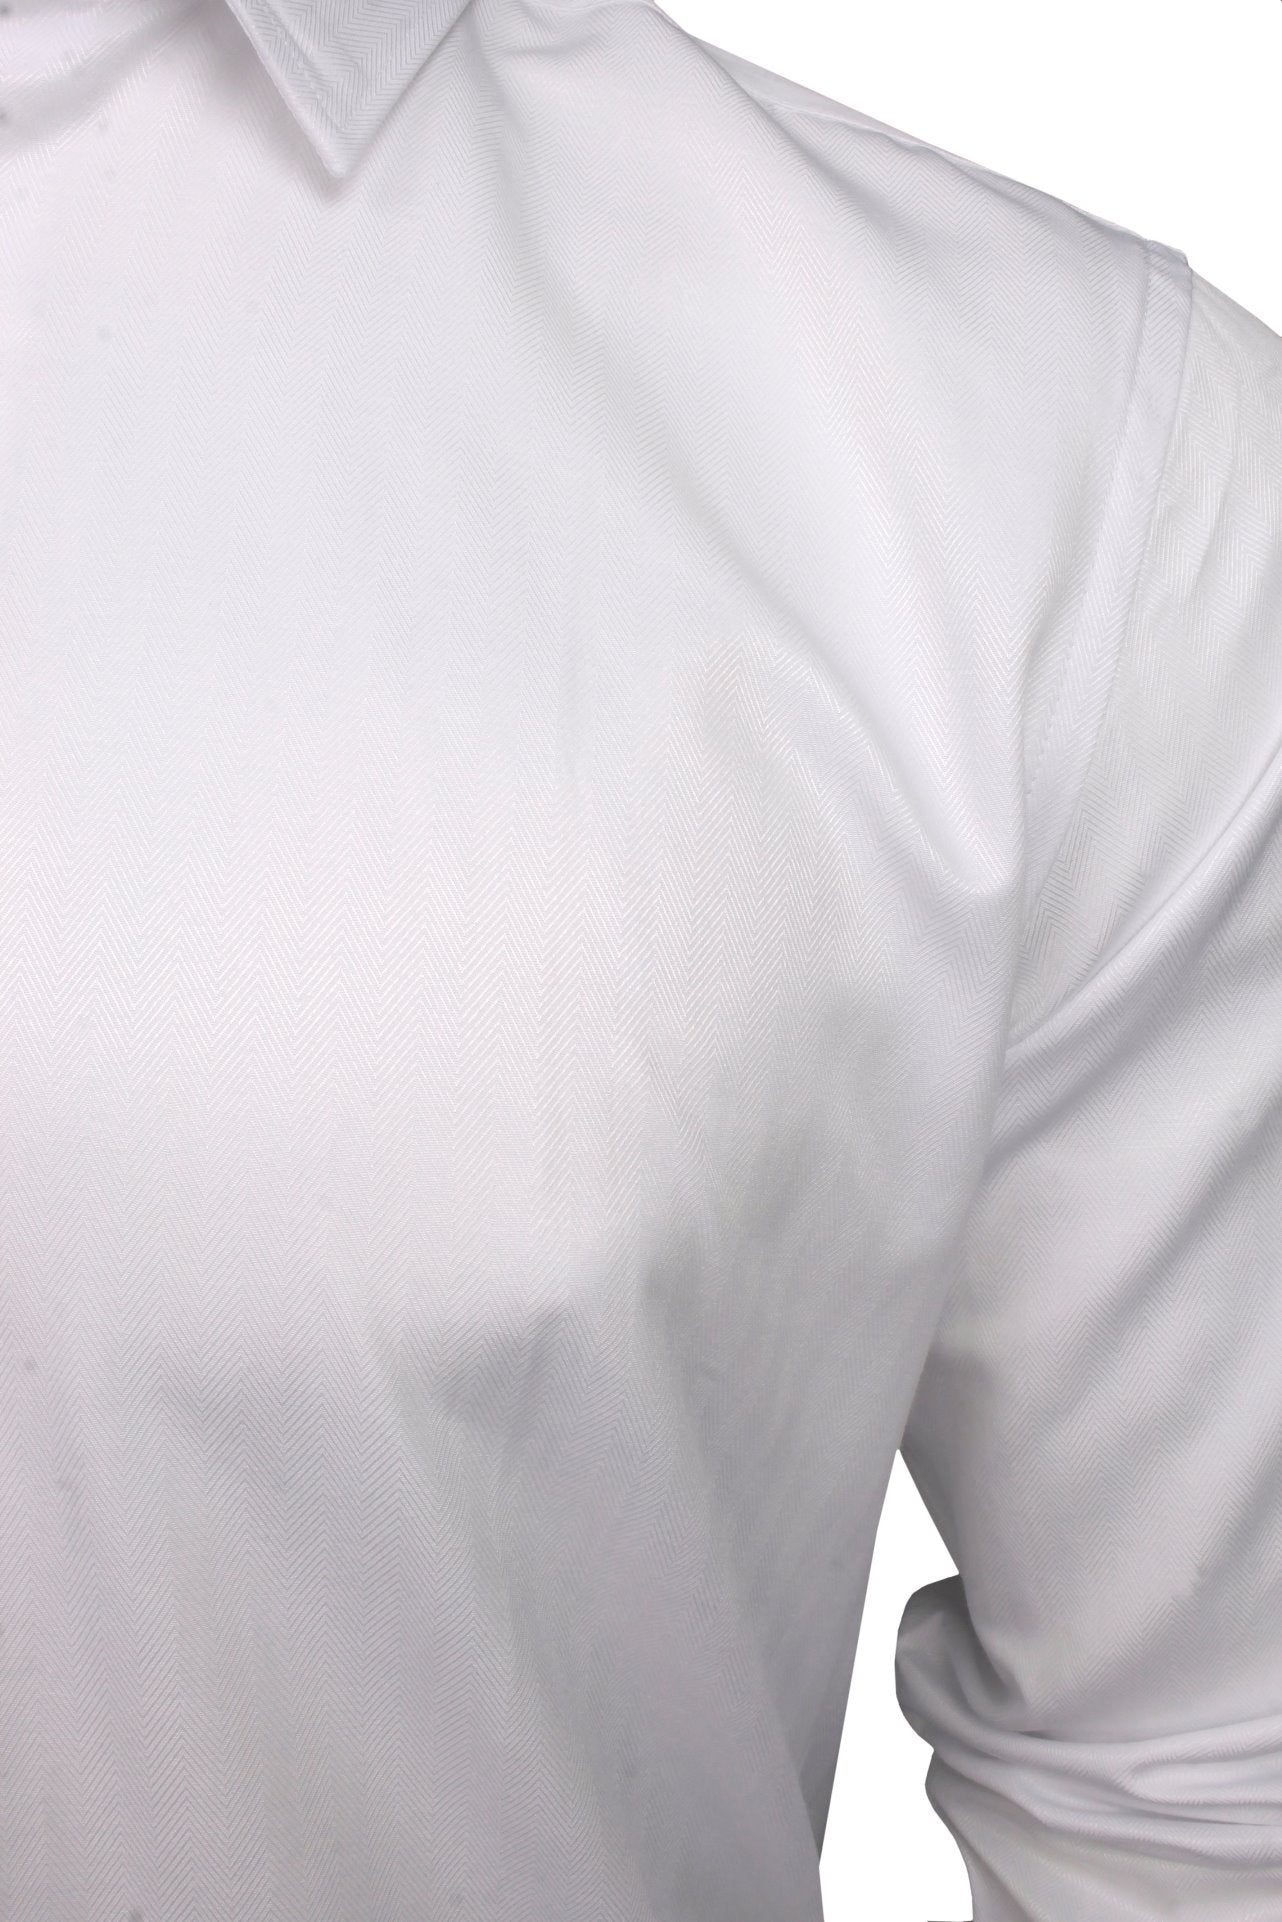 Xact Mens Herringbone Double Cuff Long Sleeved Formal/ Dress Shirt - Cufflinks Included-3